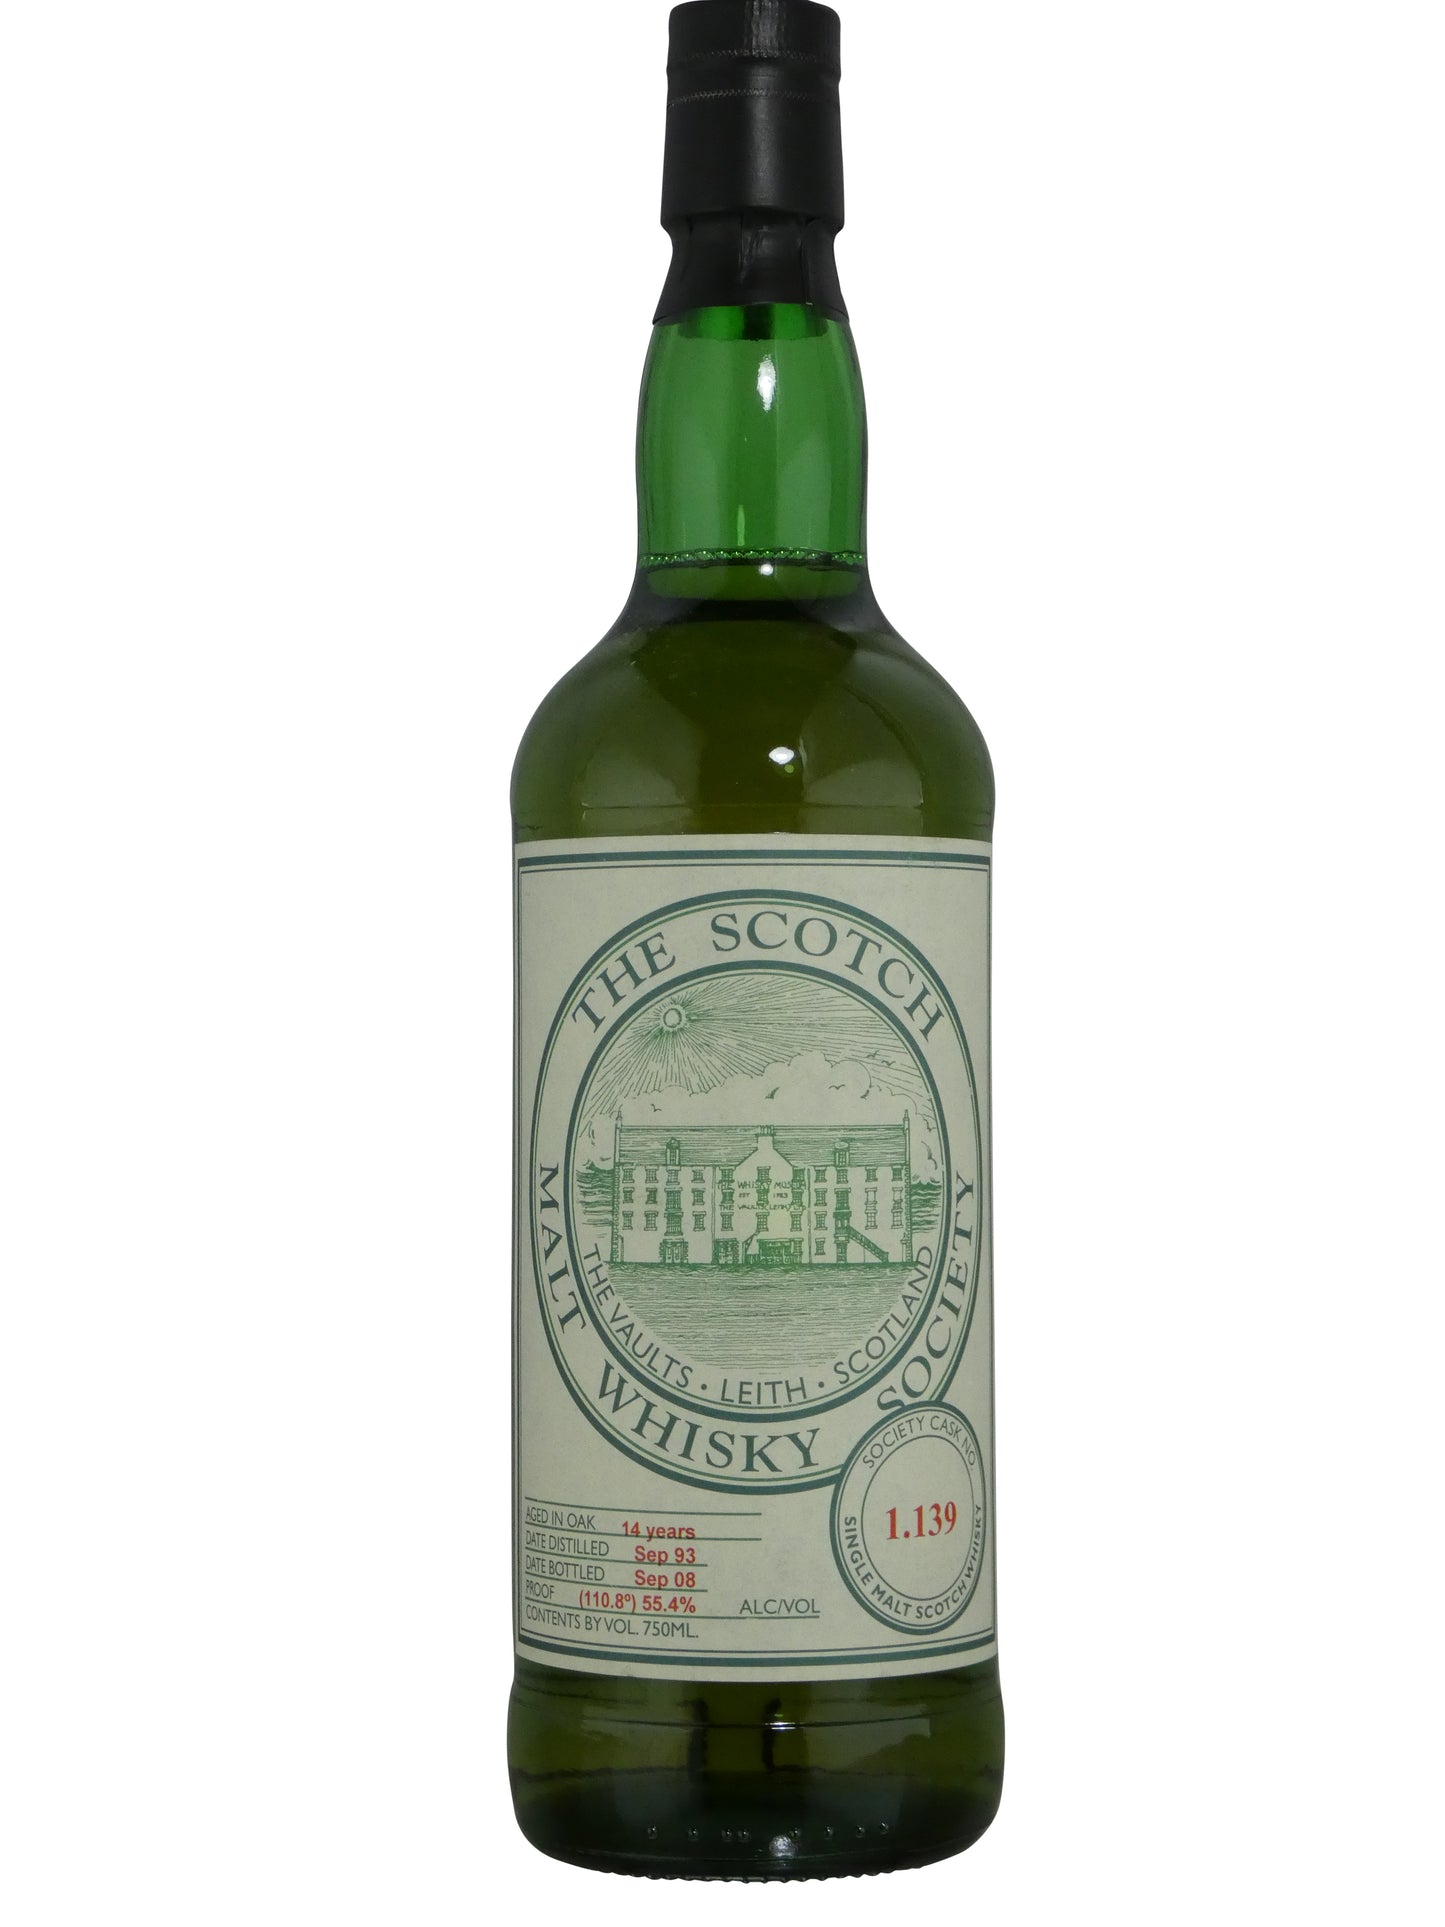 Scotch Malt Whisky Society, 1.139 (Glenfarclas), Aged 14 years, 55.4% abv. (750ml)